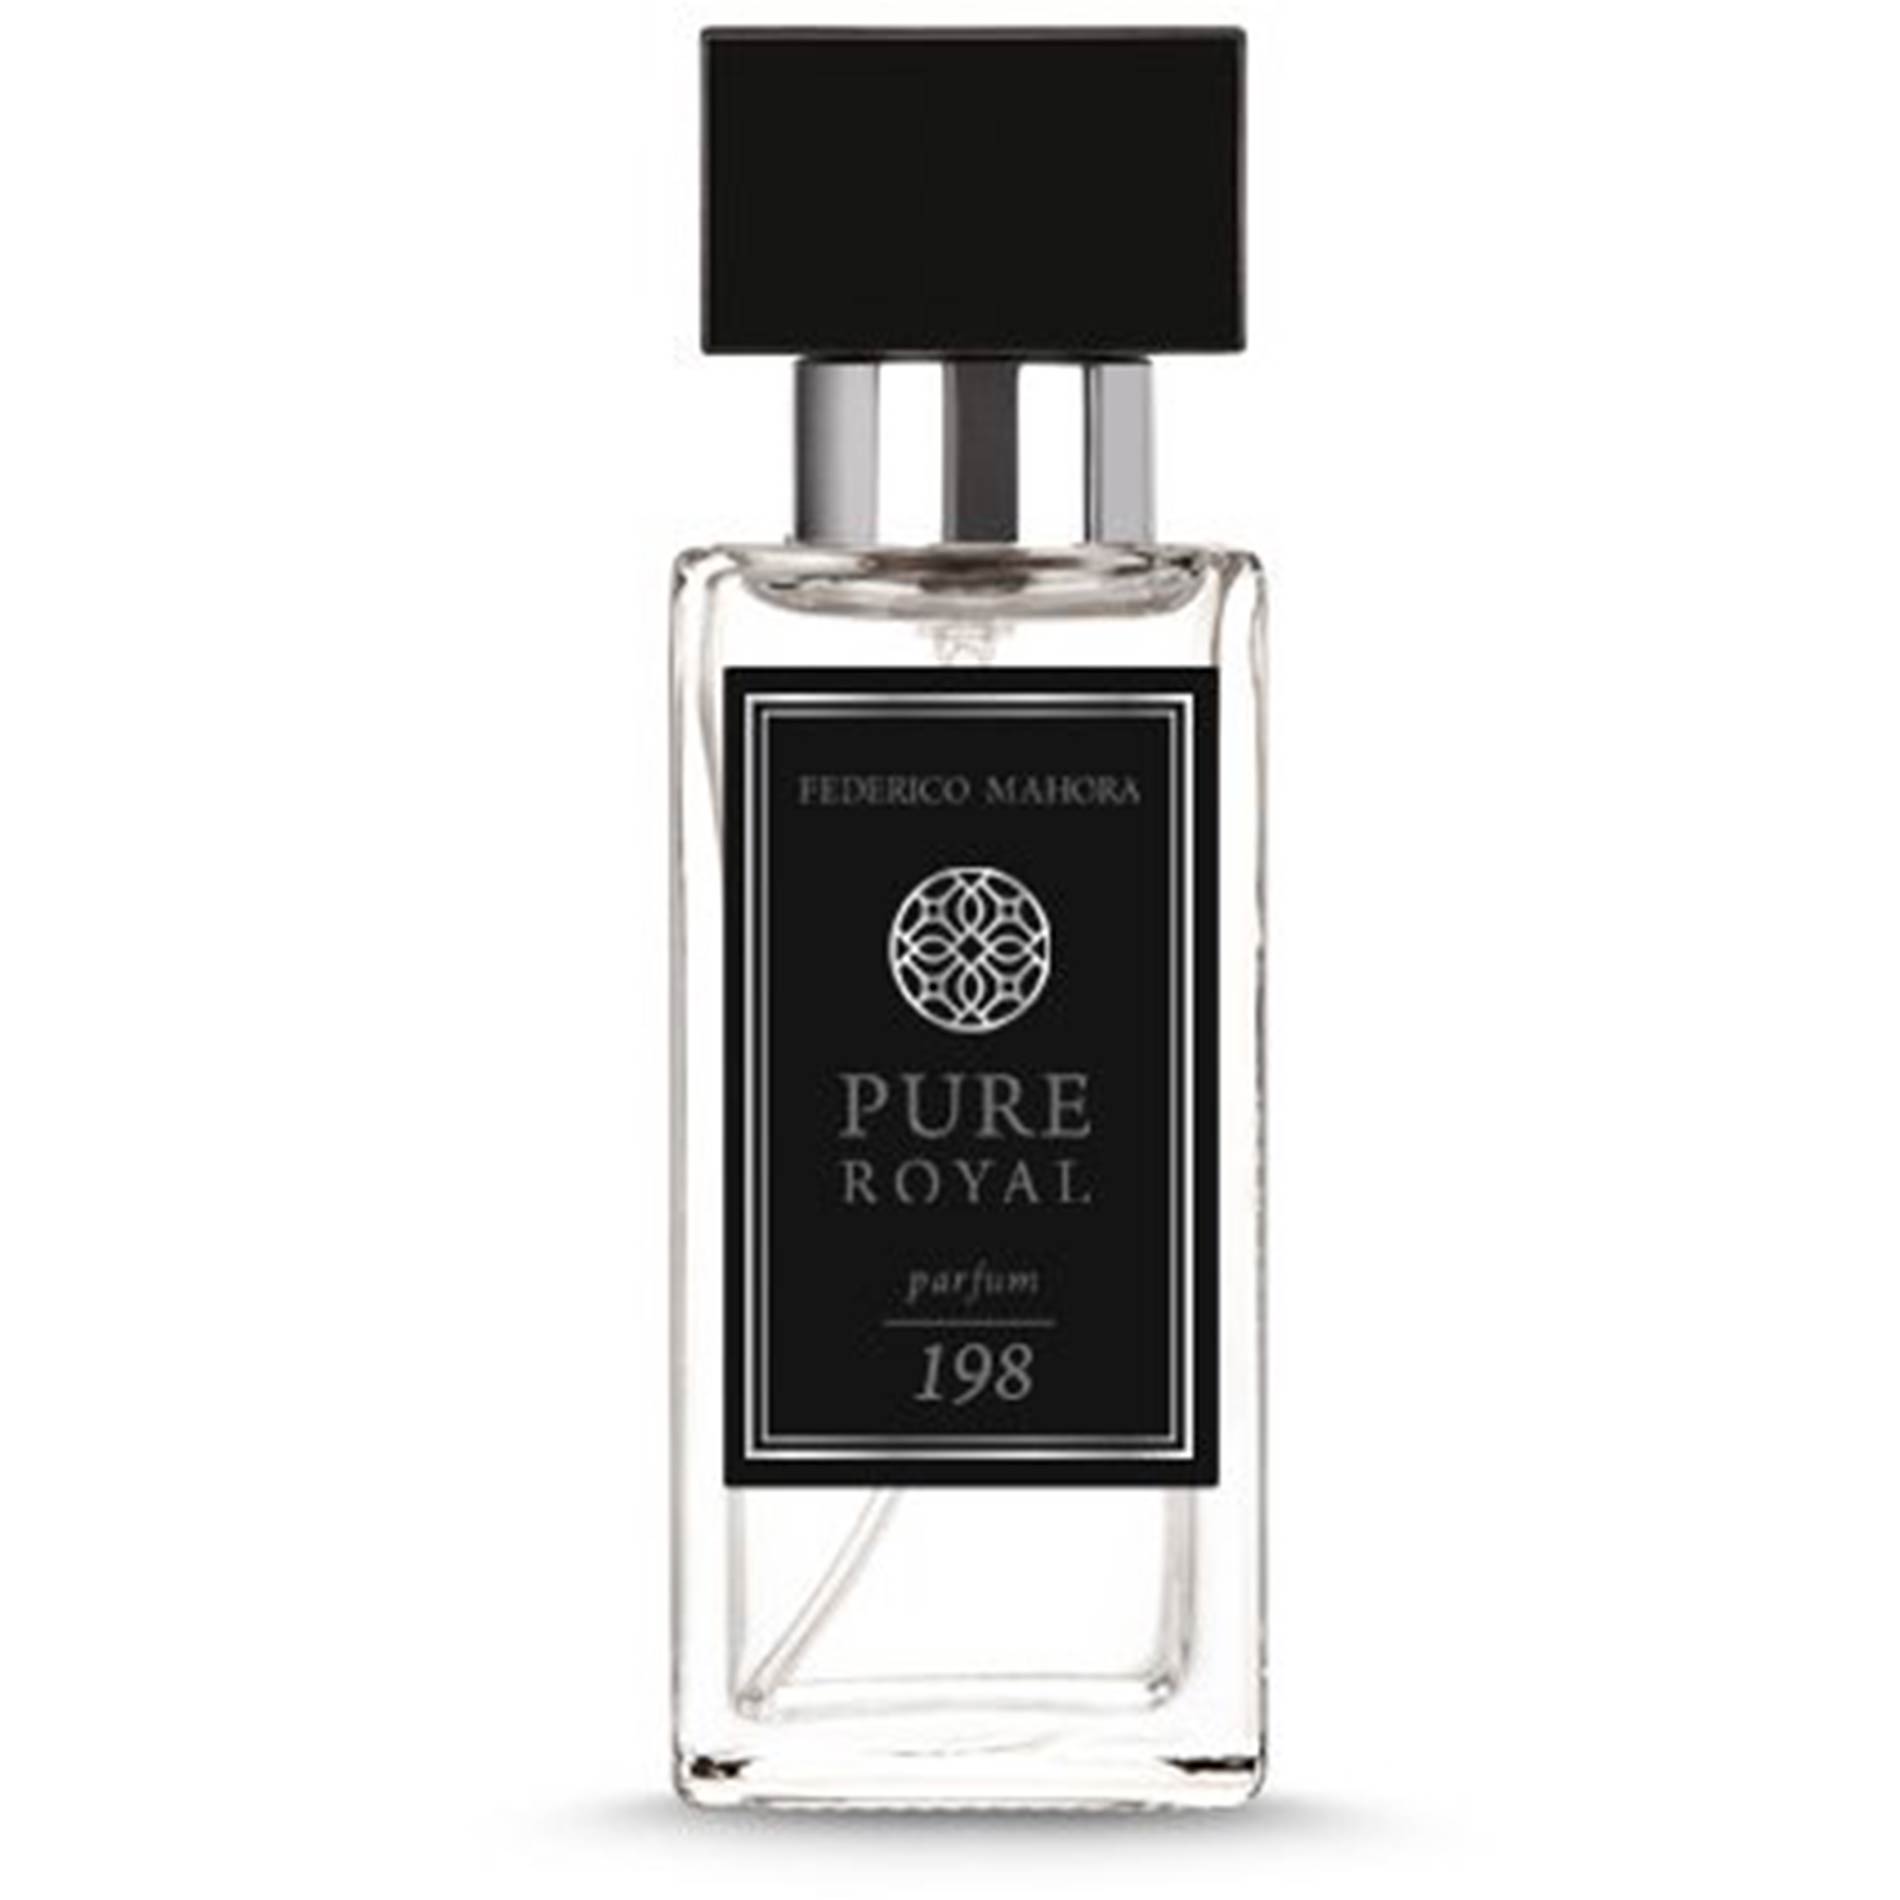 pure royal 198 parfum federico mahora